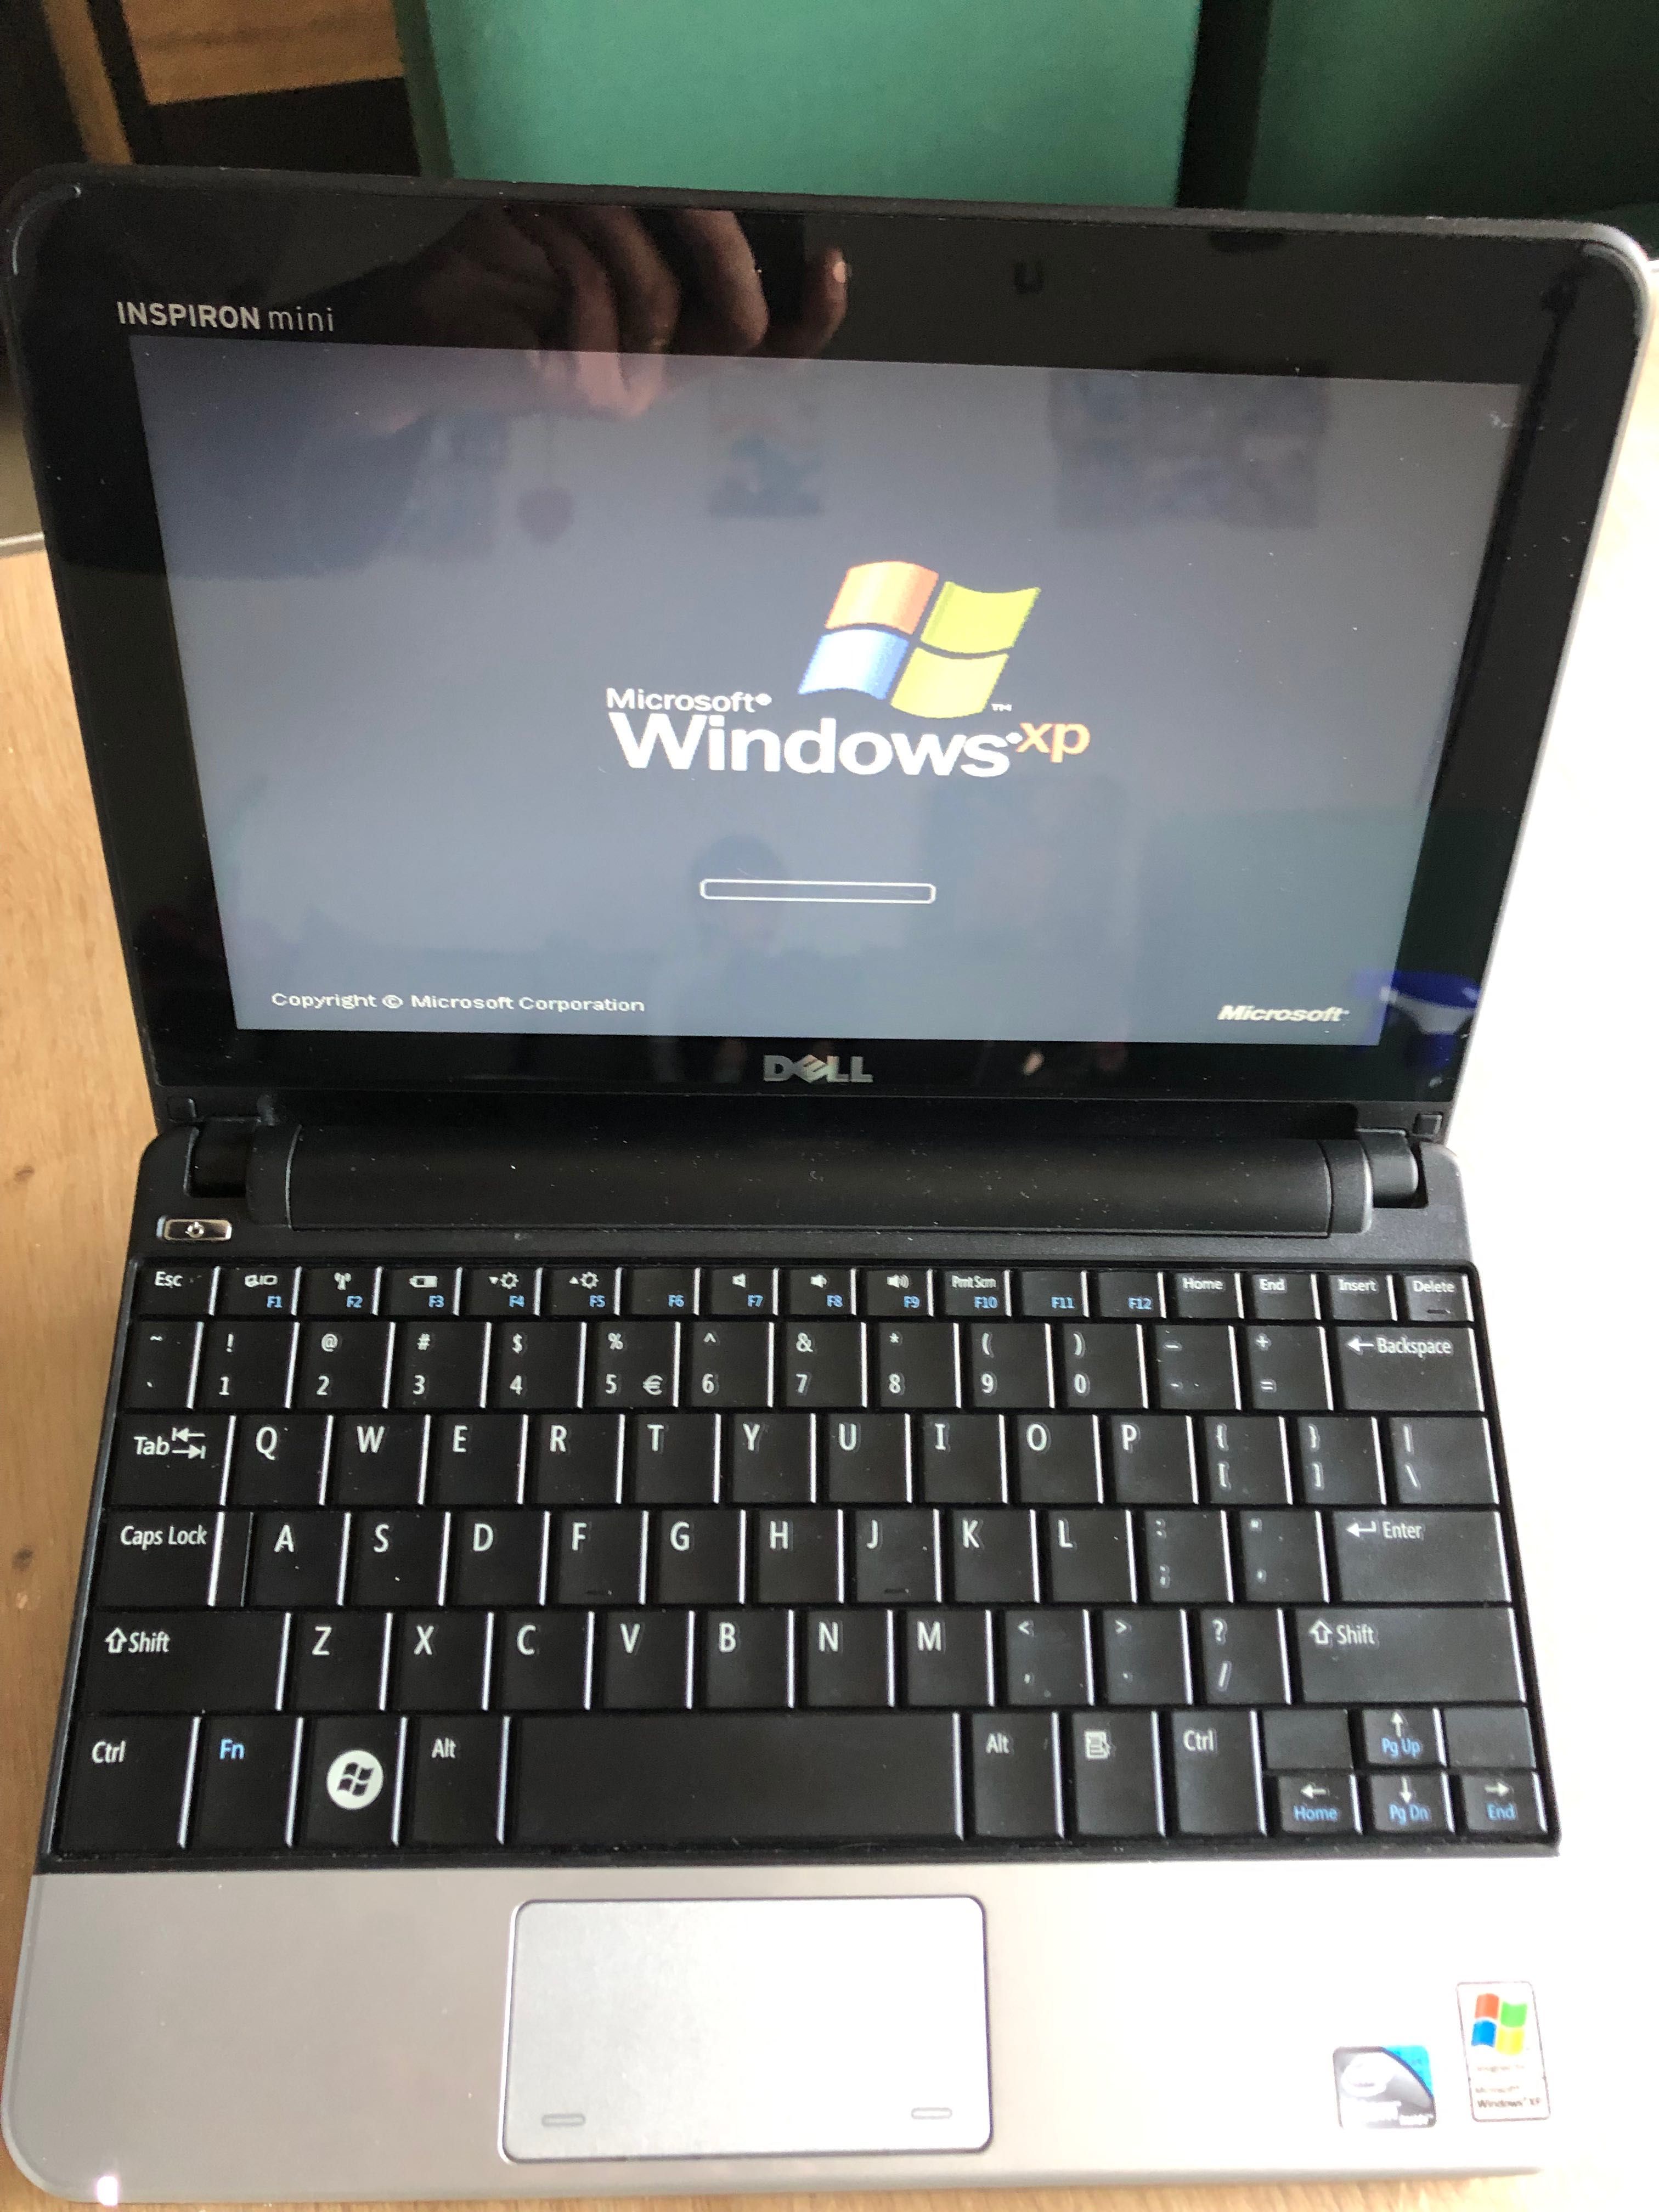 Laptop netbook Dell Inspirion MINI Intel atom 250hdd 1GB ram